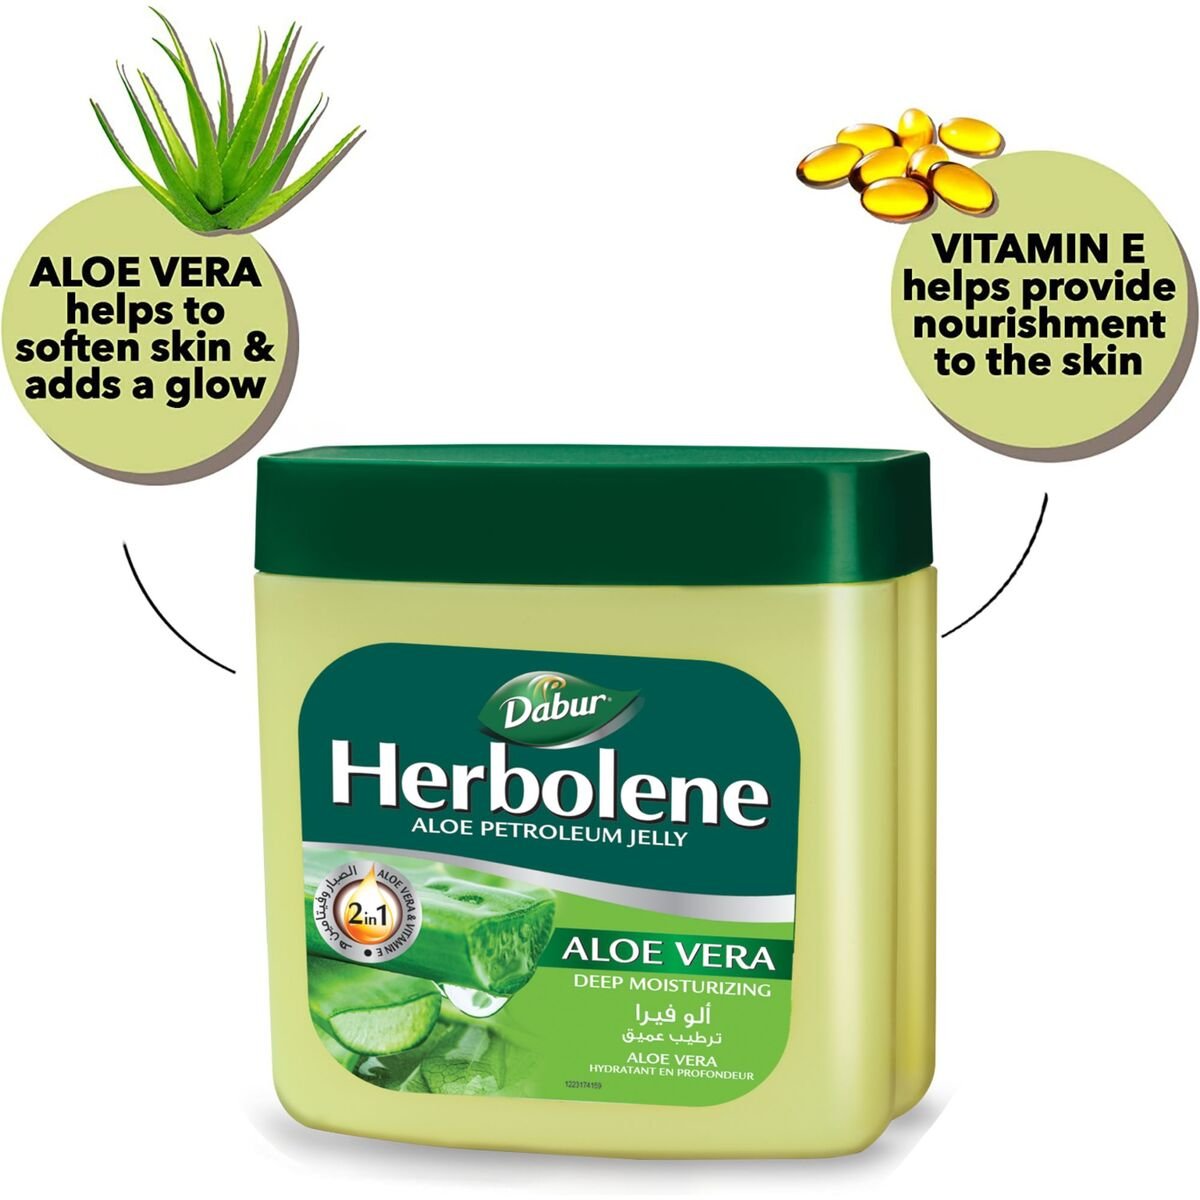 Dabur Herbolene Aloe Petroleum Jelly Enriched with Aloe Vera and Vitamin E 425 ml